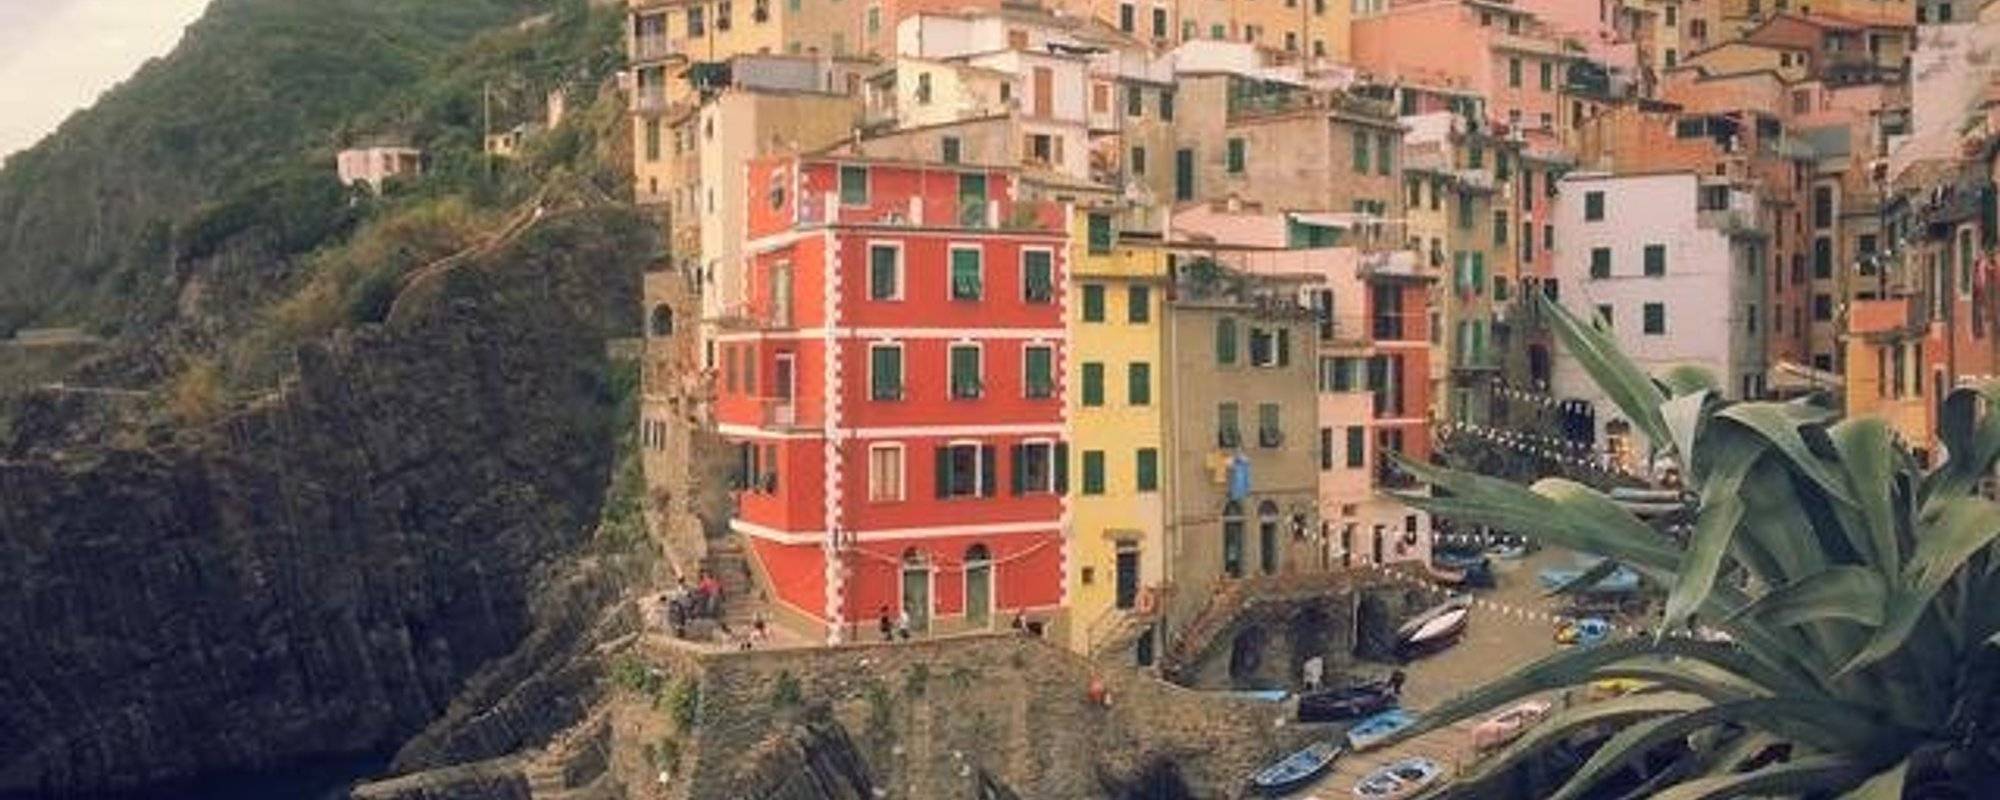 Fifty Shades Of Cinque Terre